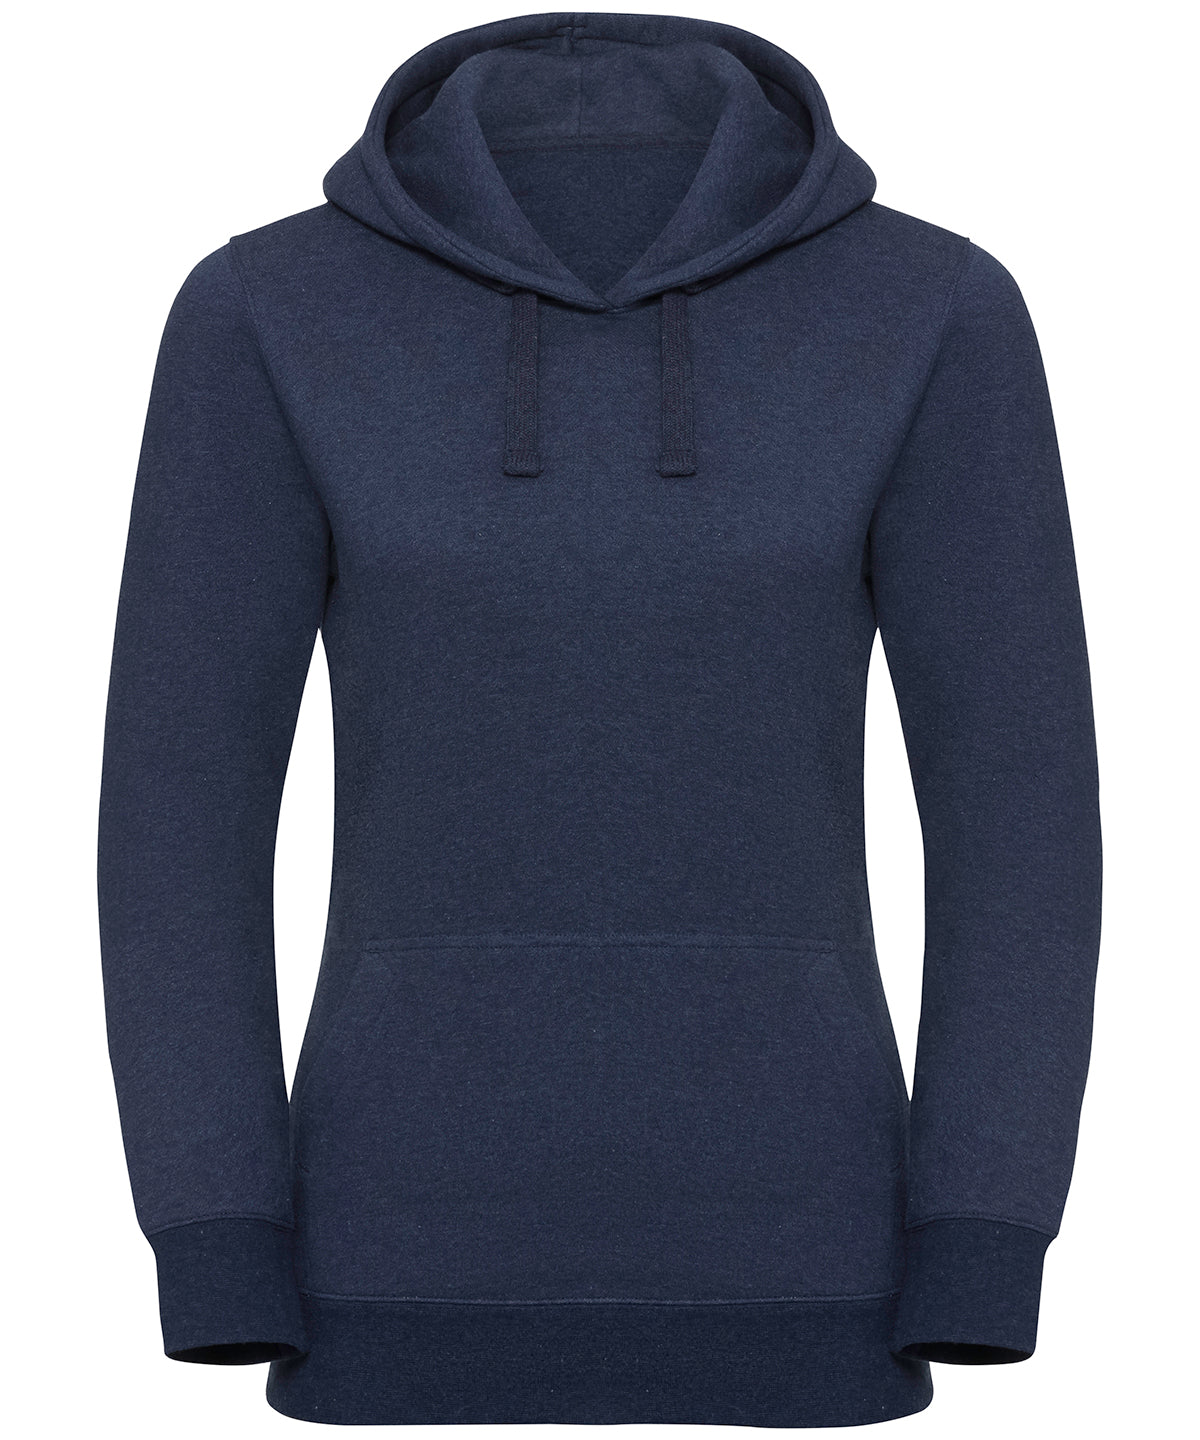 Hettupeysur - Women's Authentic Melange Hooded Sweatshirt